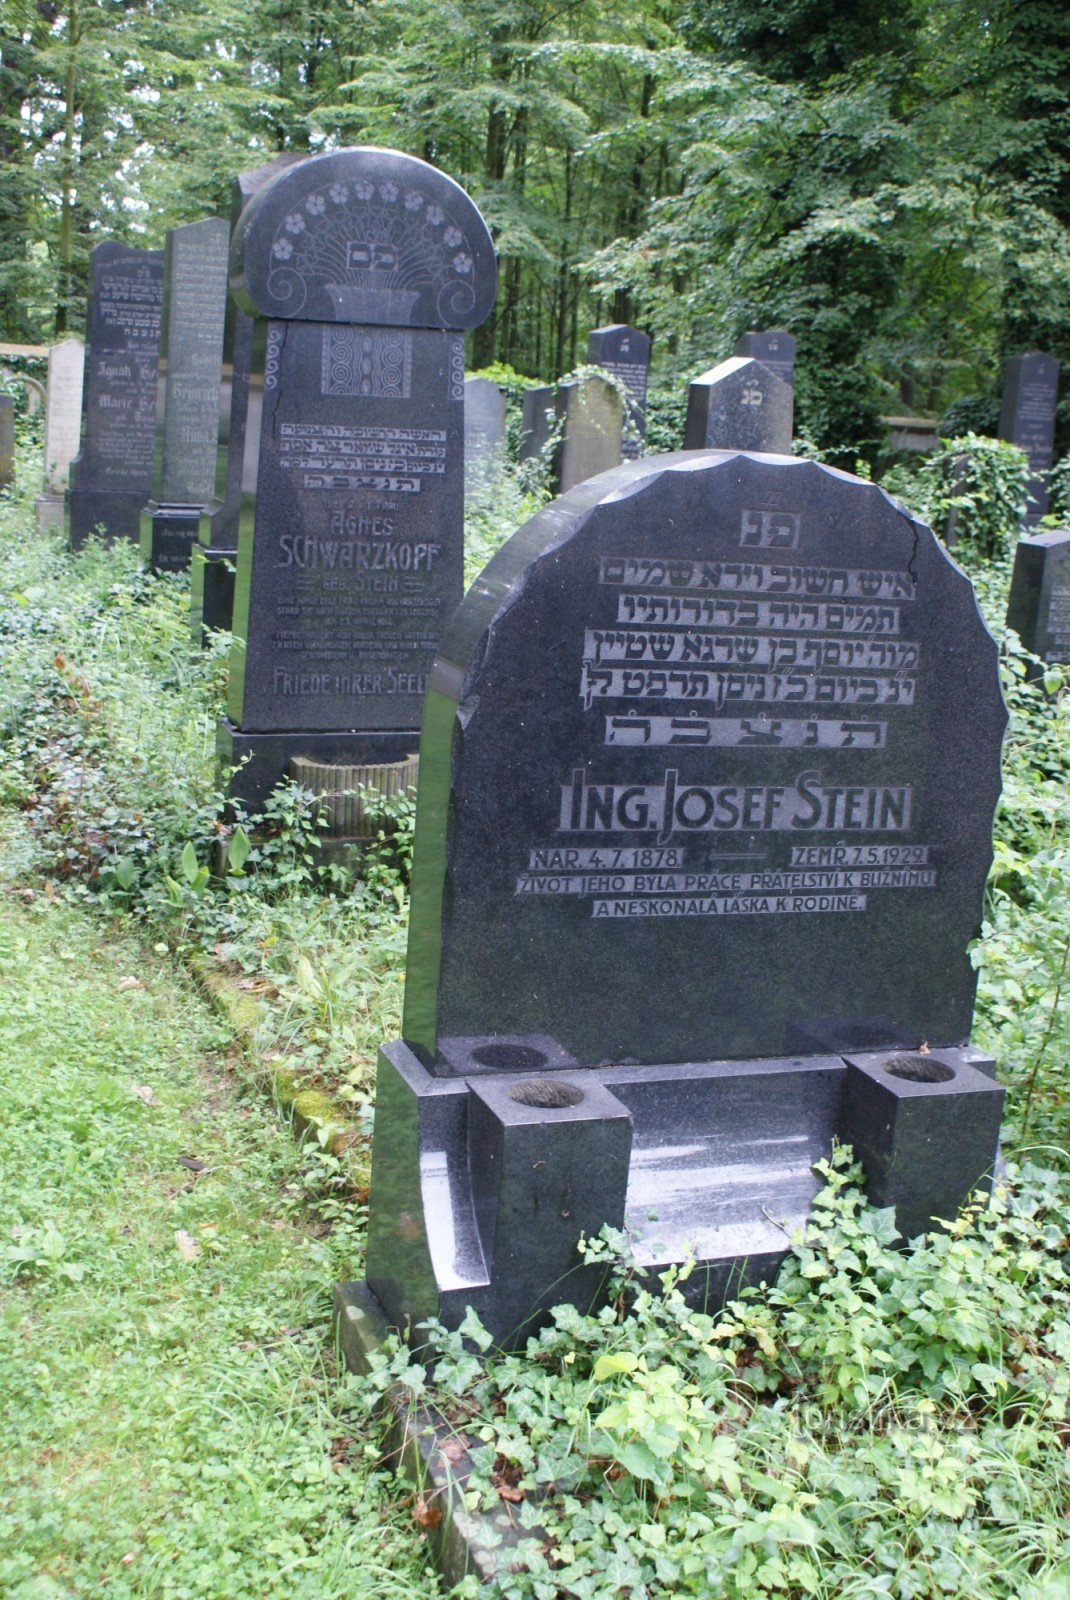 Hluboká nad Vltavou – cimetière juif